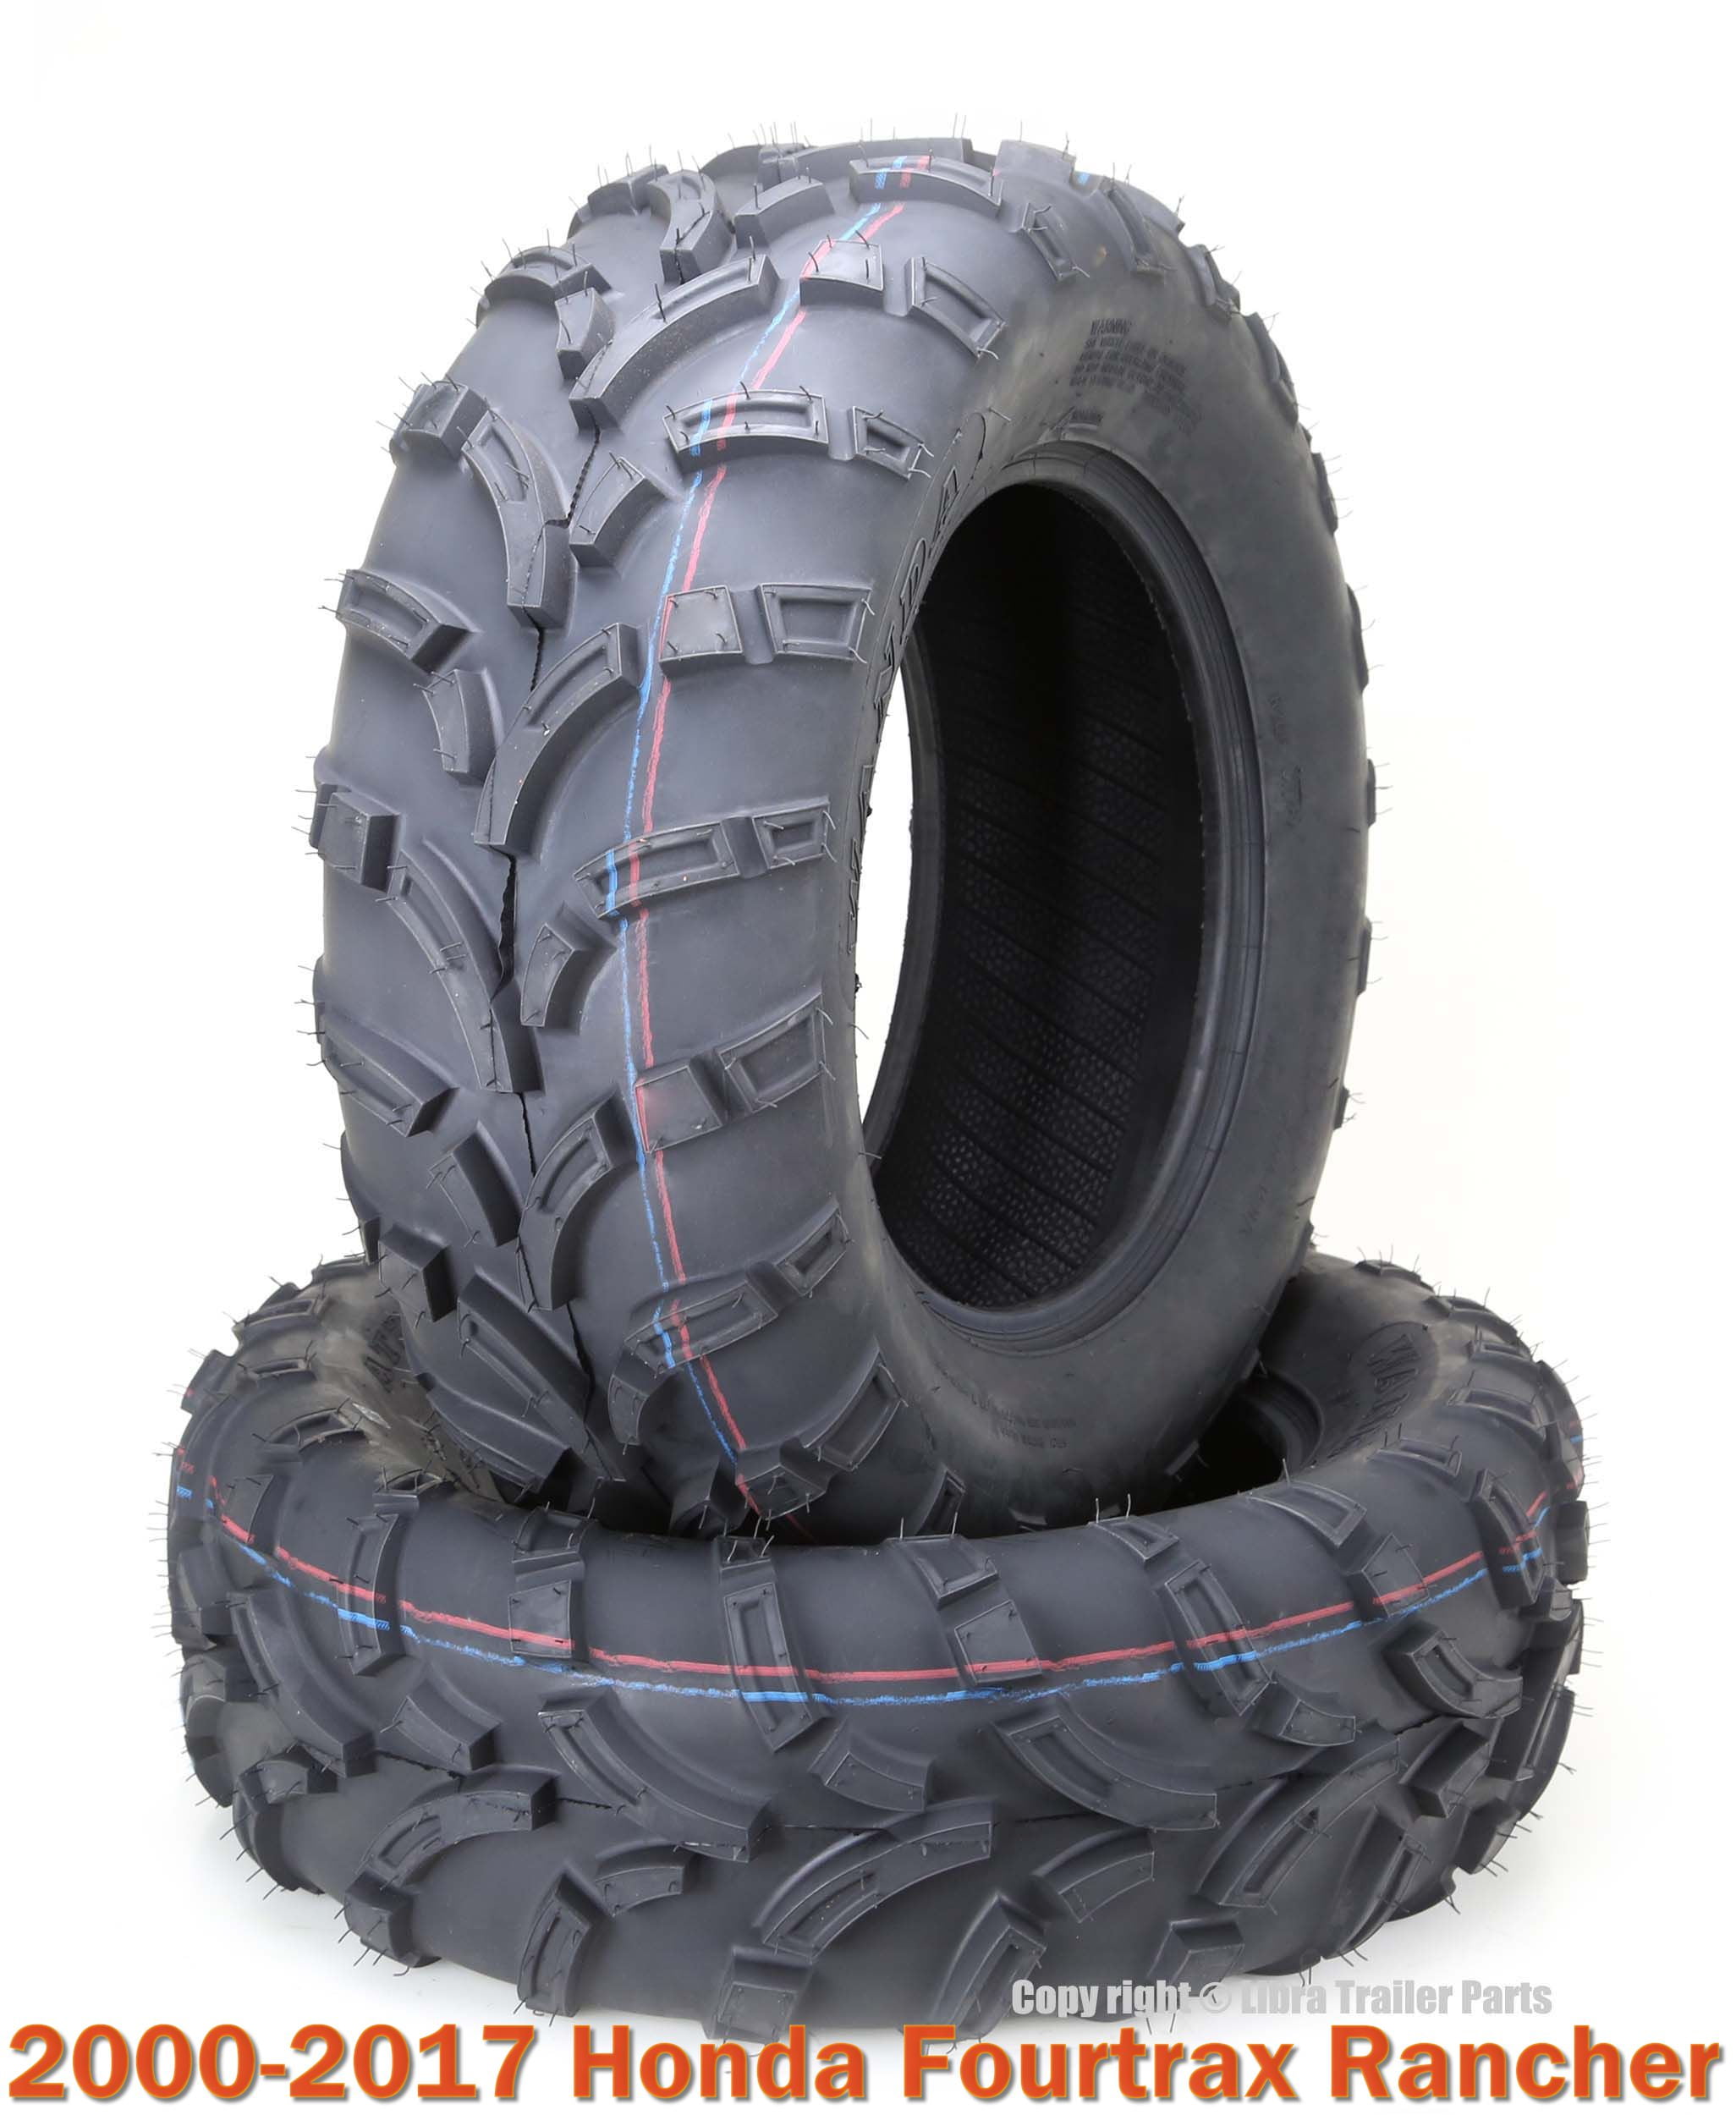 Set 4 ATV tires 24x8-12 & 24x10-11 for 04-17 Honda Fourtrax Rancher TRX400 420 